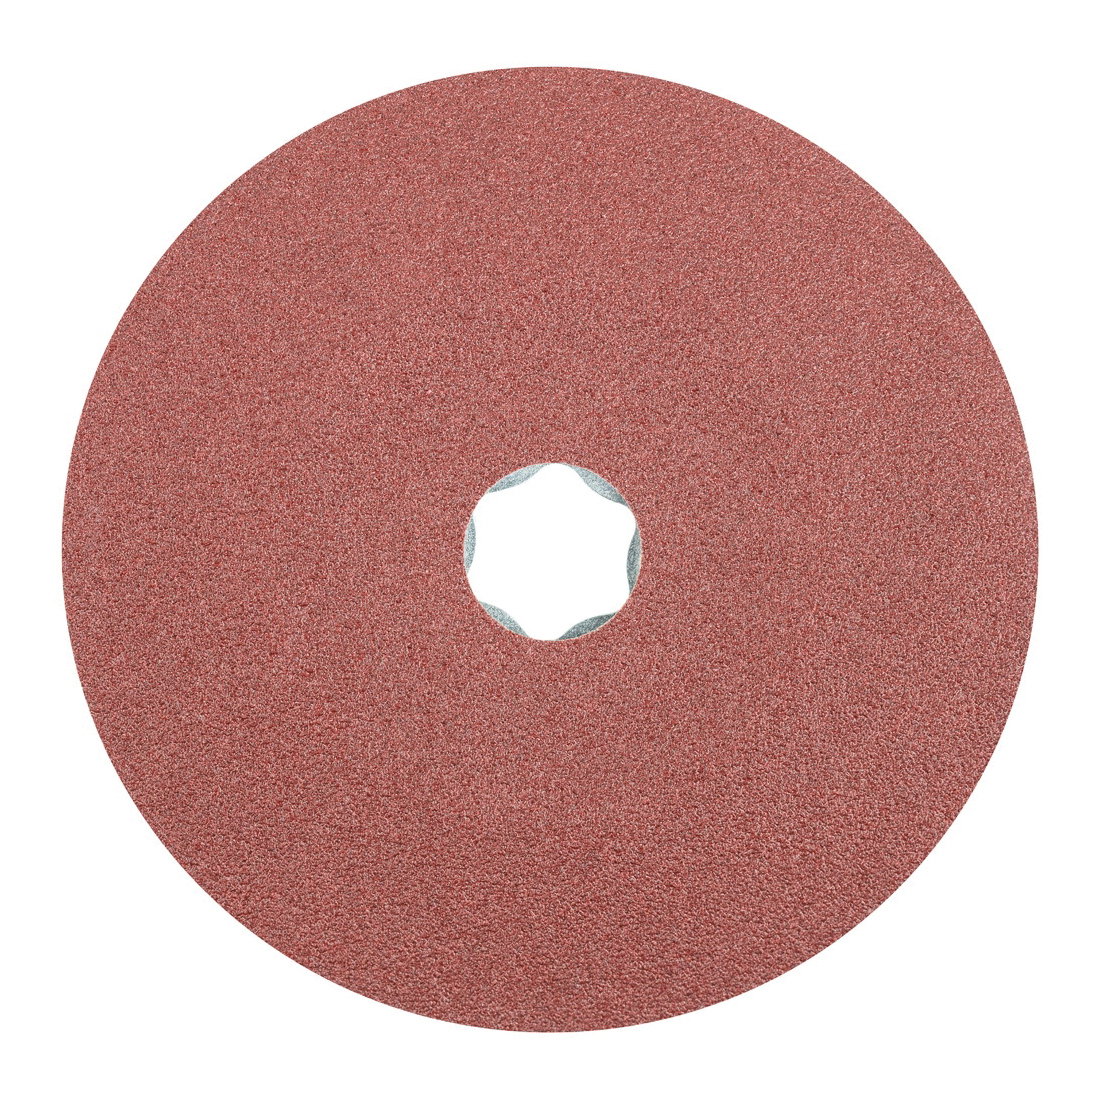 PFERD COMBICLICK® 40103 Coated Abrasive Disc, 5 in Dia, 80 Grit, Aluminum Oxide Abrasive